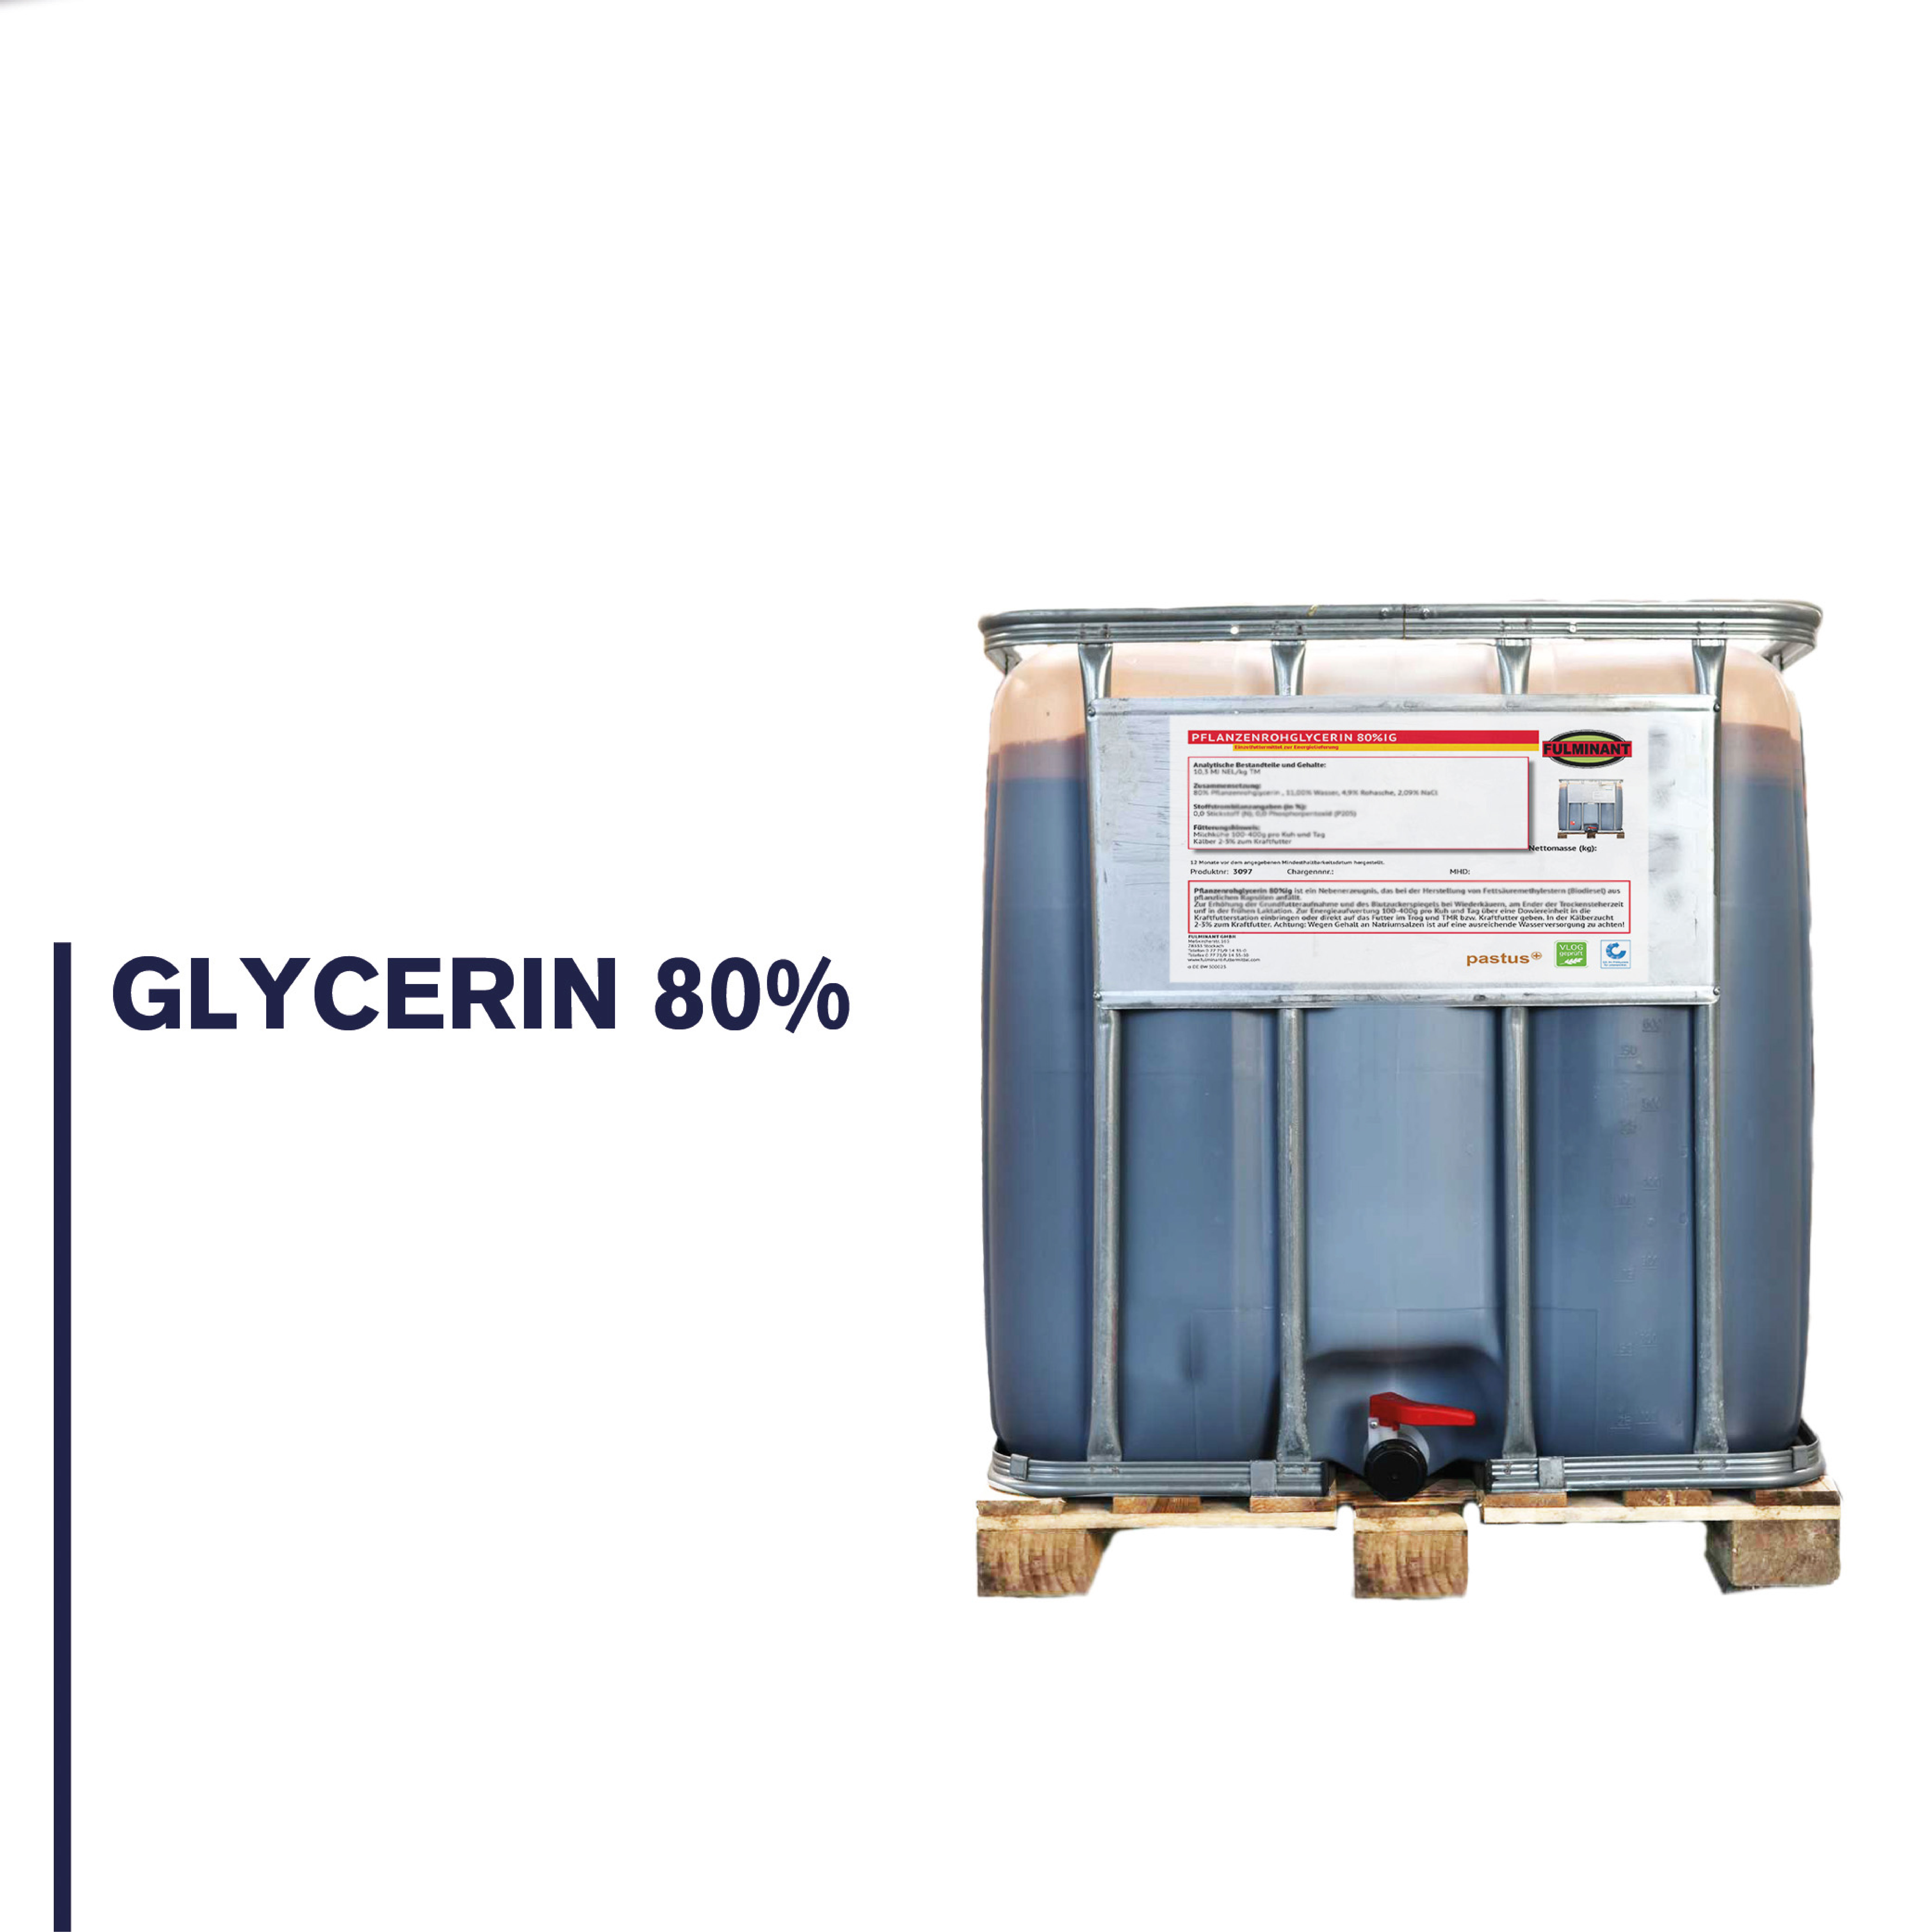 Glycerin 80%